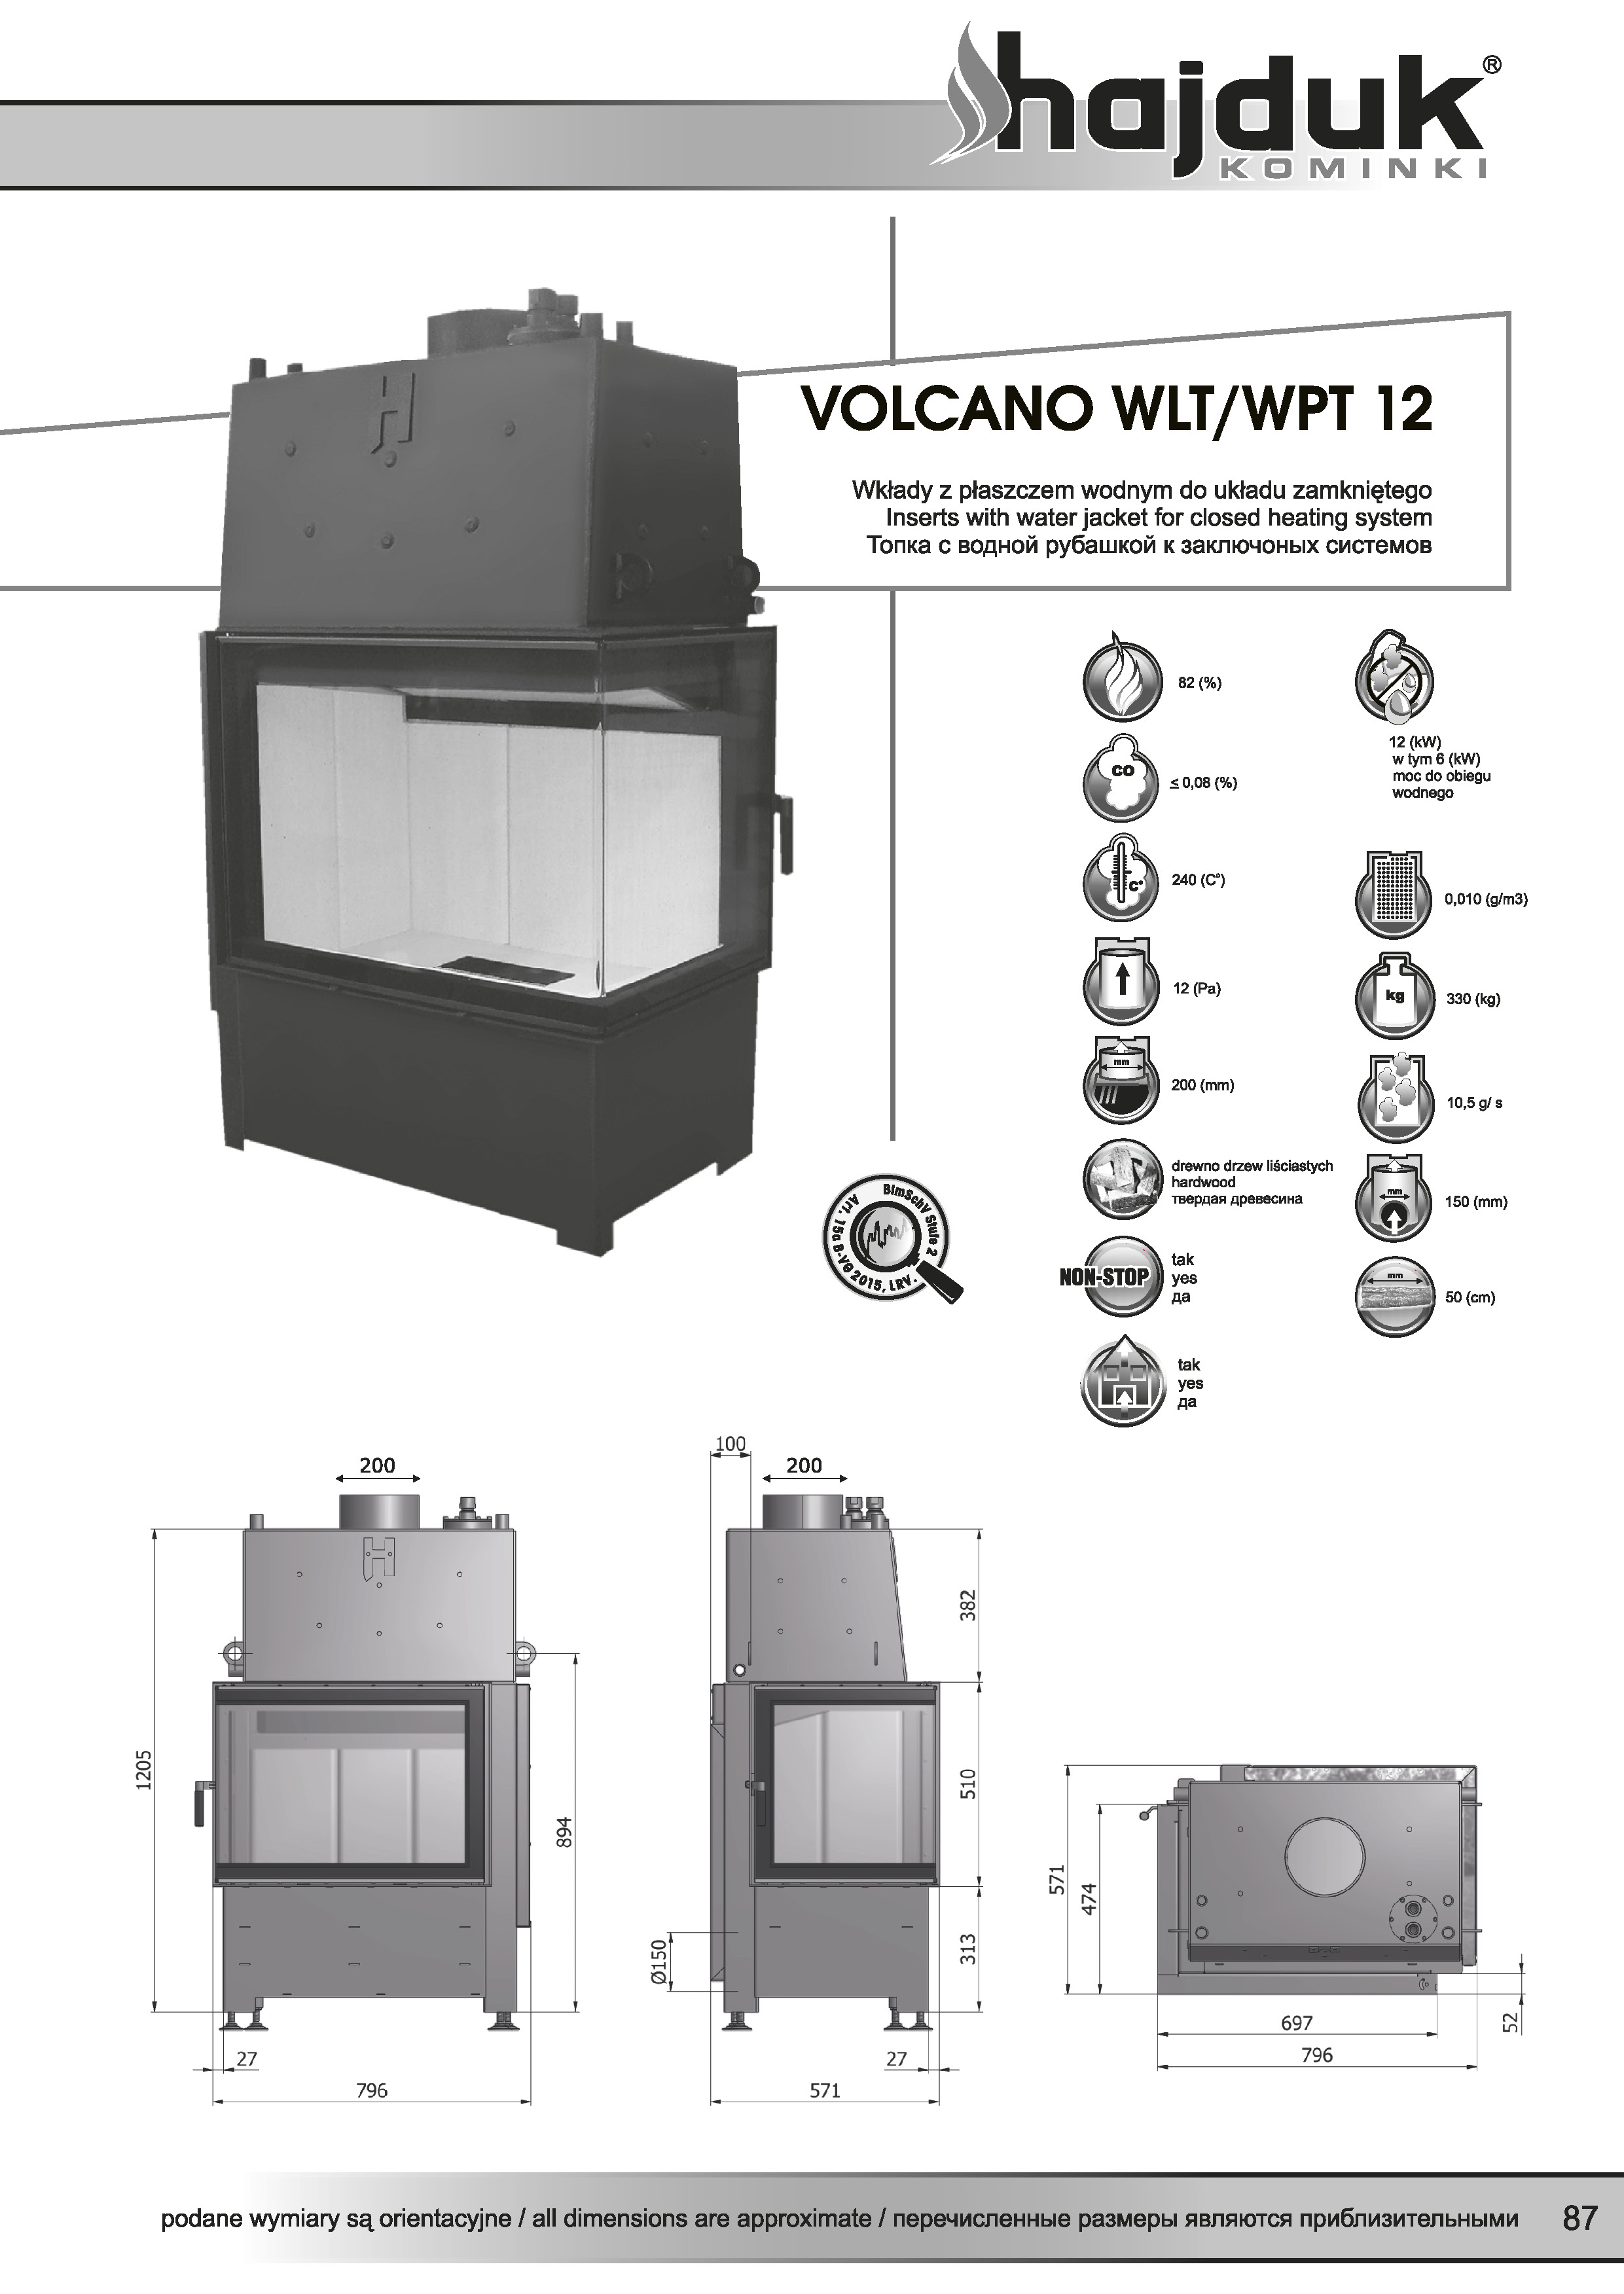 Volcano%20WLT%20WPT%20 %2012%20 %20karta%20techniczna - Wasserführende Kamineinsätz Hajduk  Volcano WLT 12